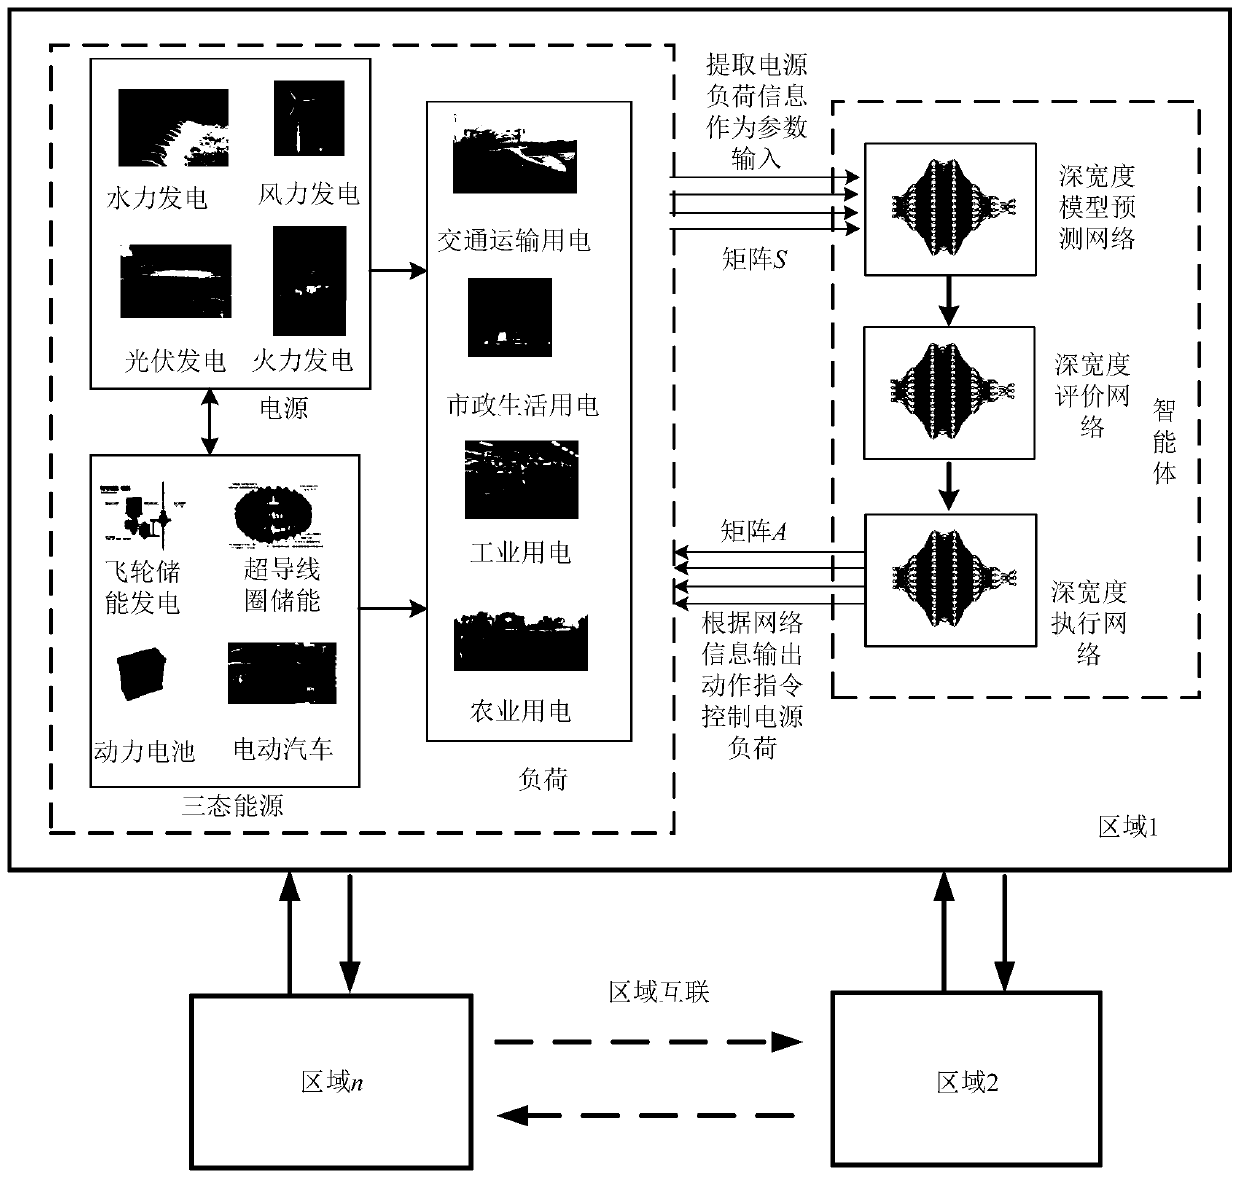 Expandable deep-width adaptive dynamic programming intelligent power generation control method